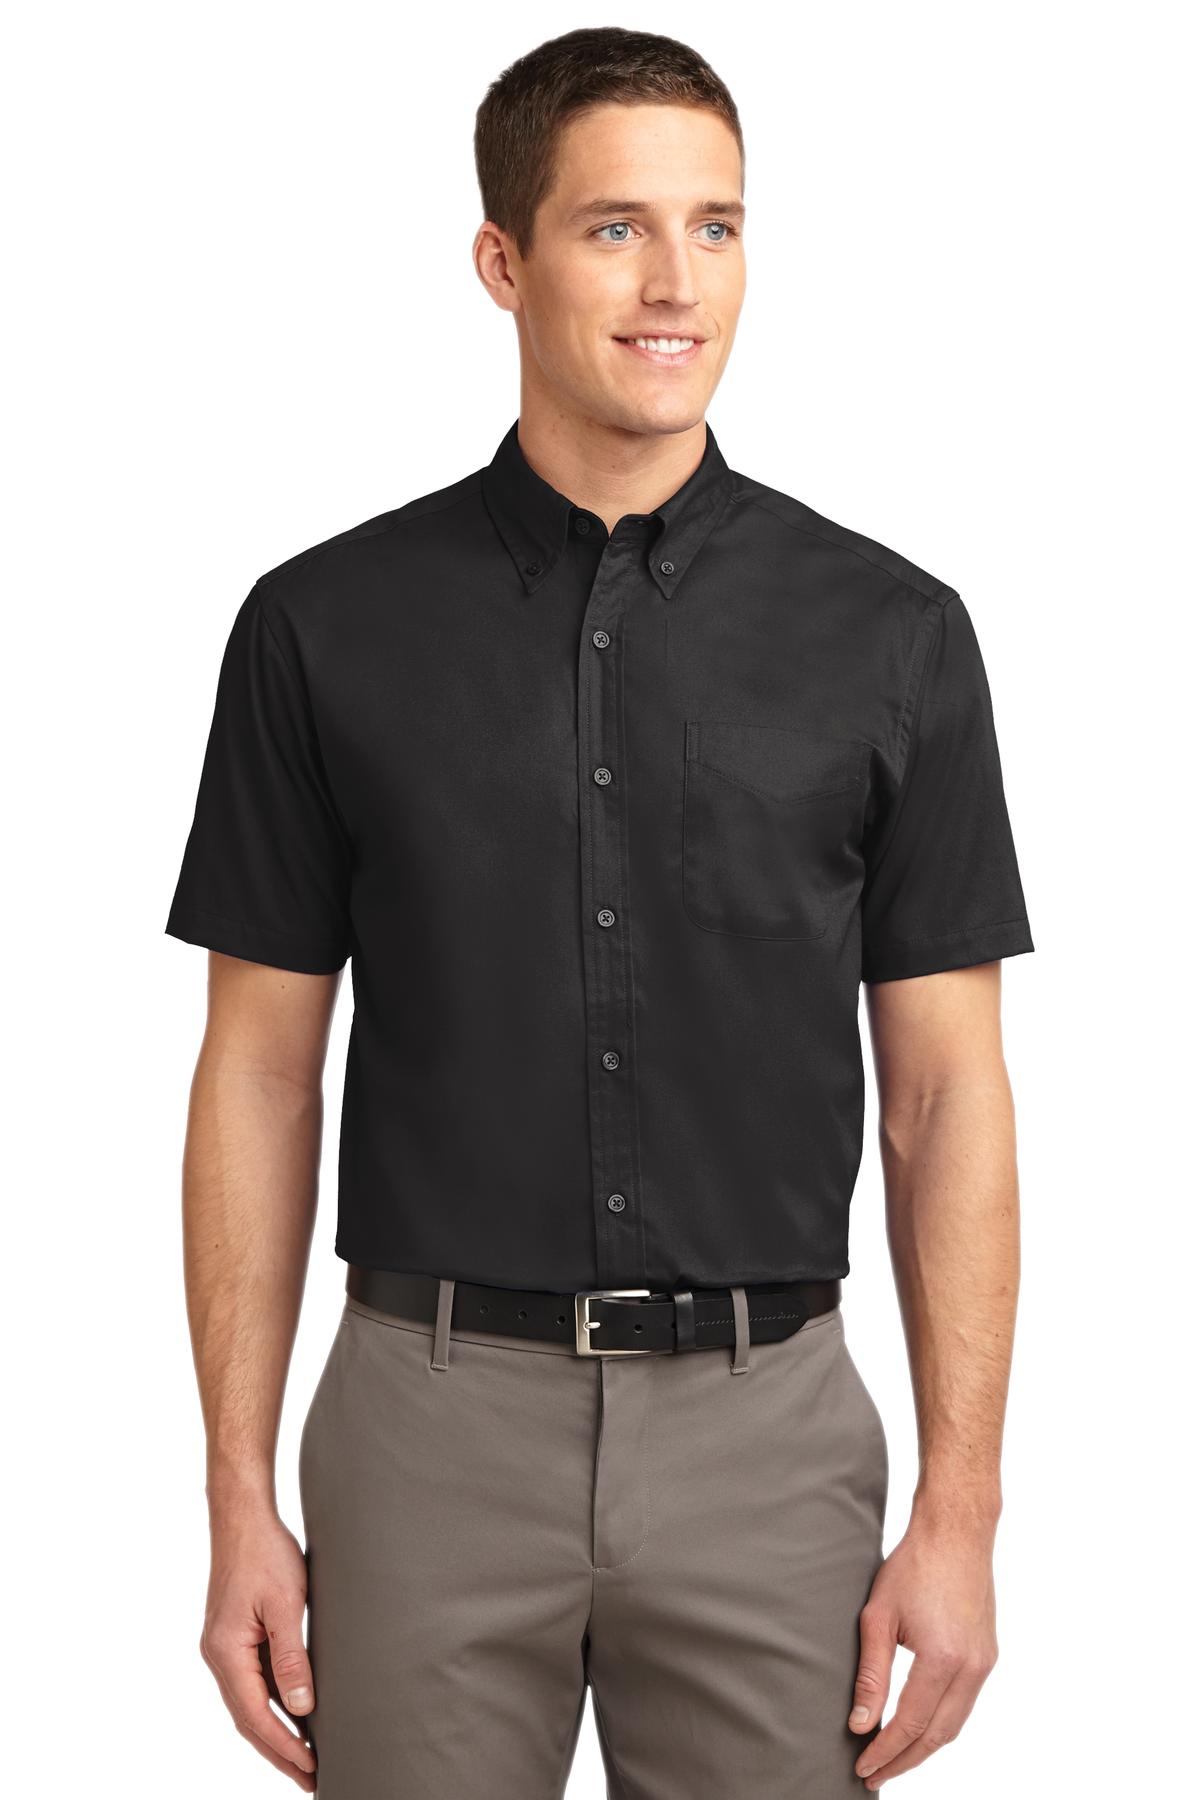 Port Authority S508 | Short Sleeve Easy Care Shirt | ShirtSpace